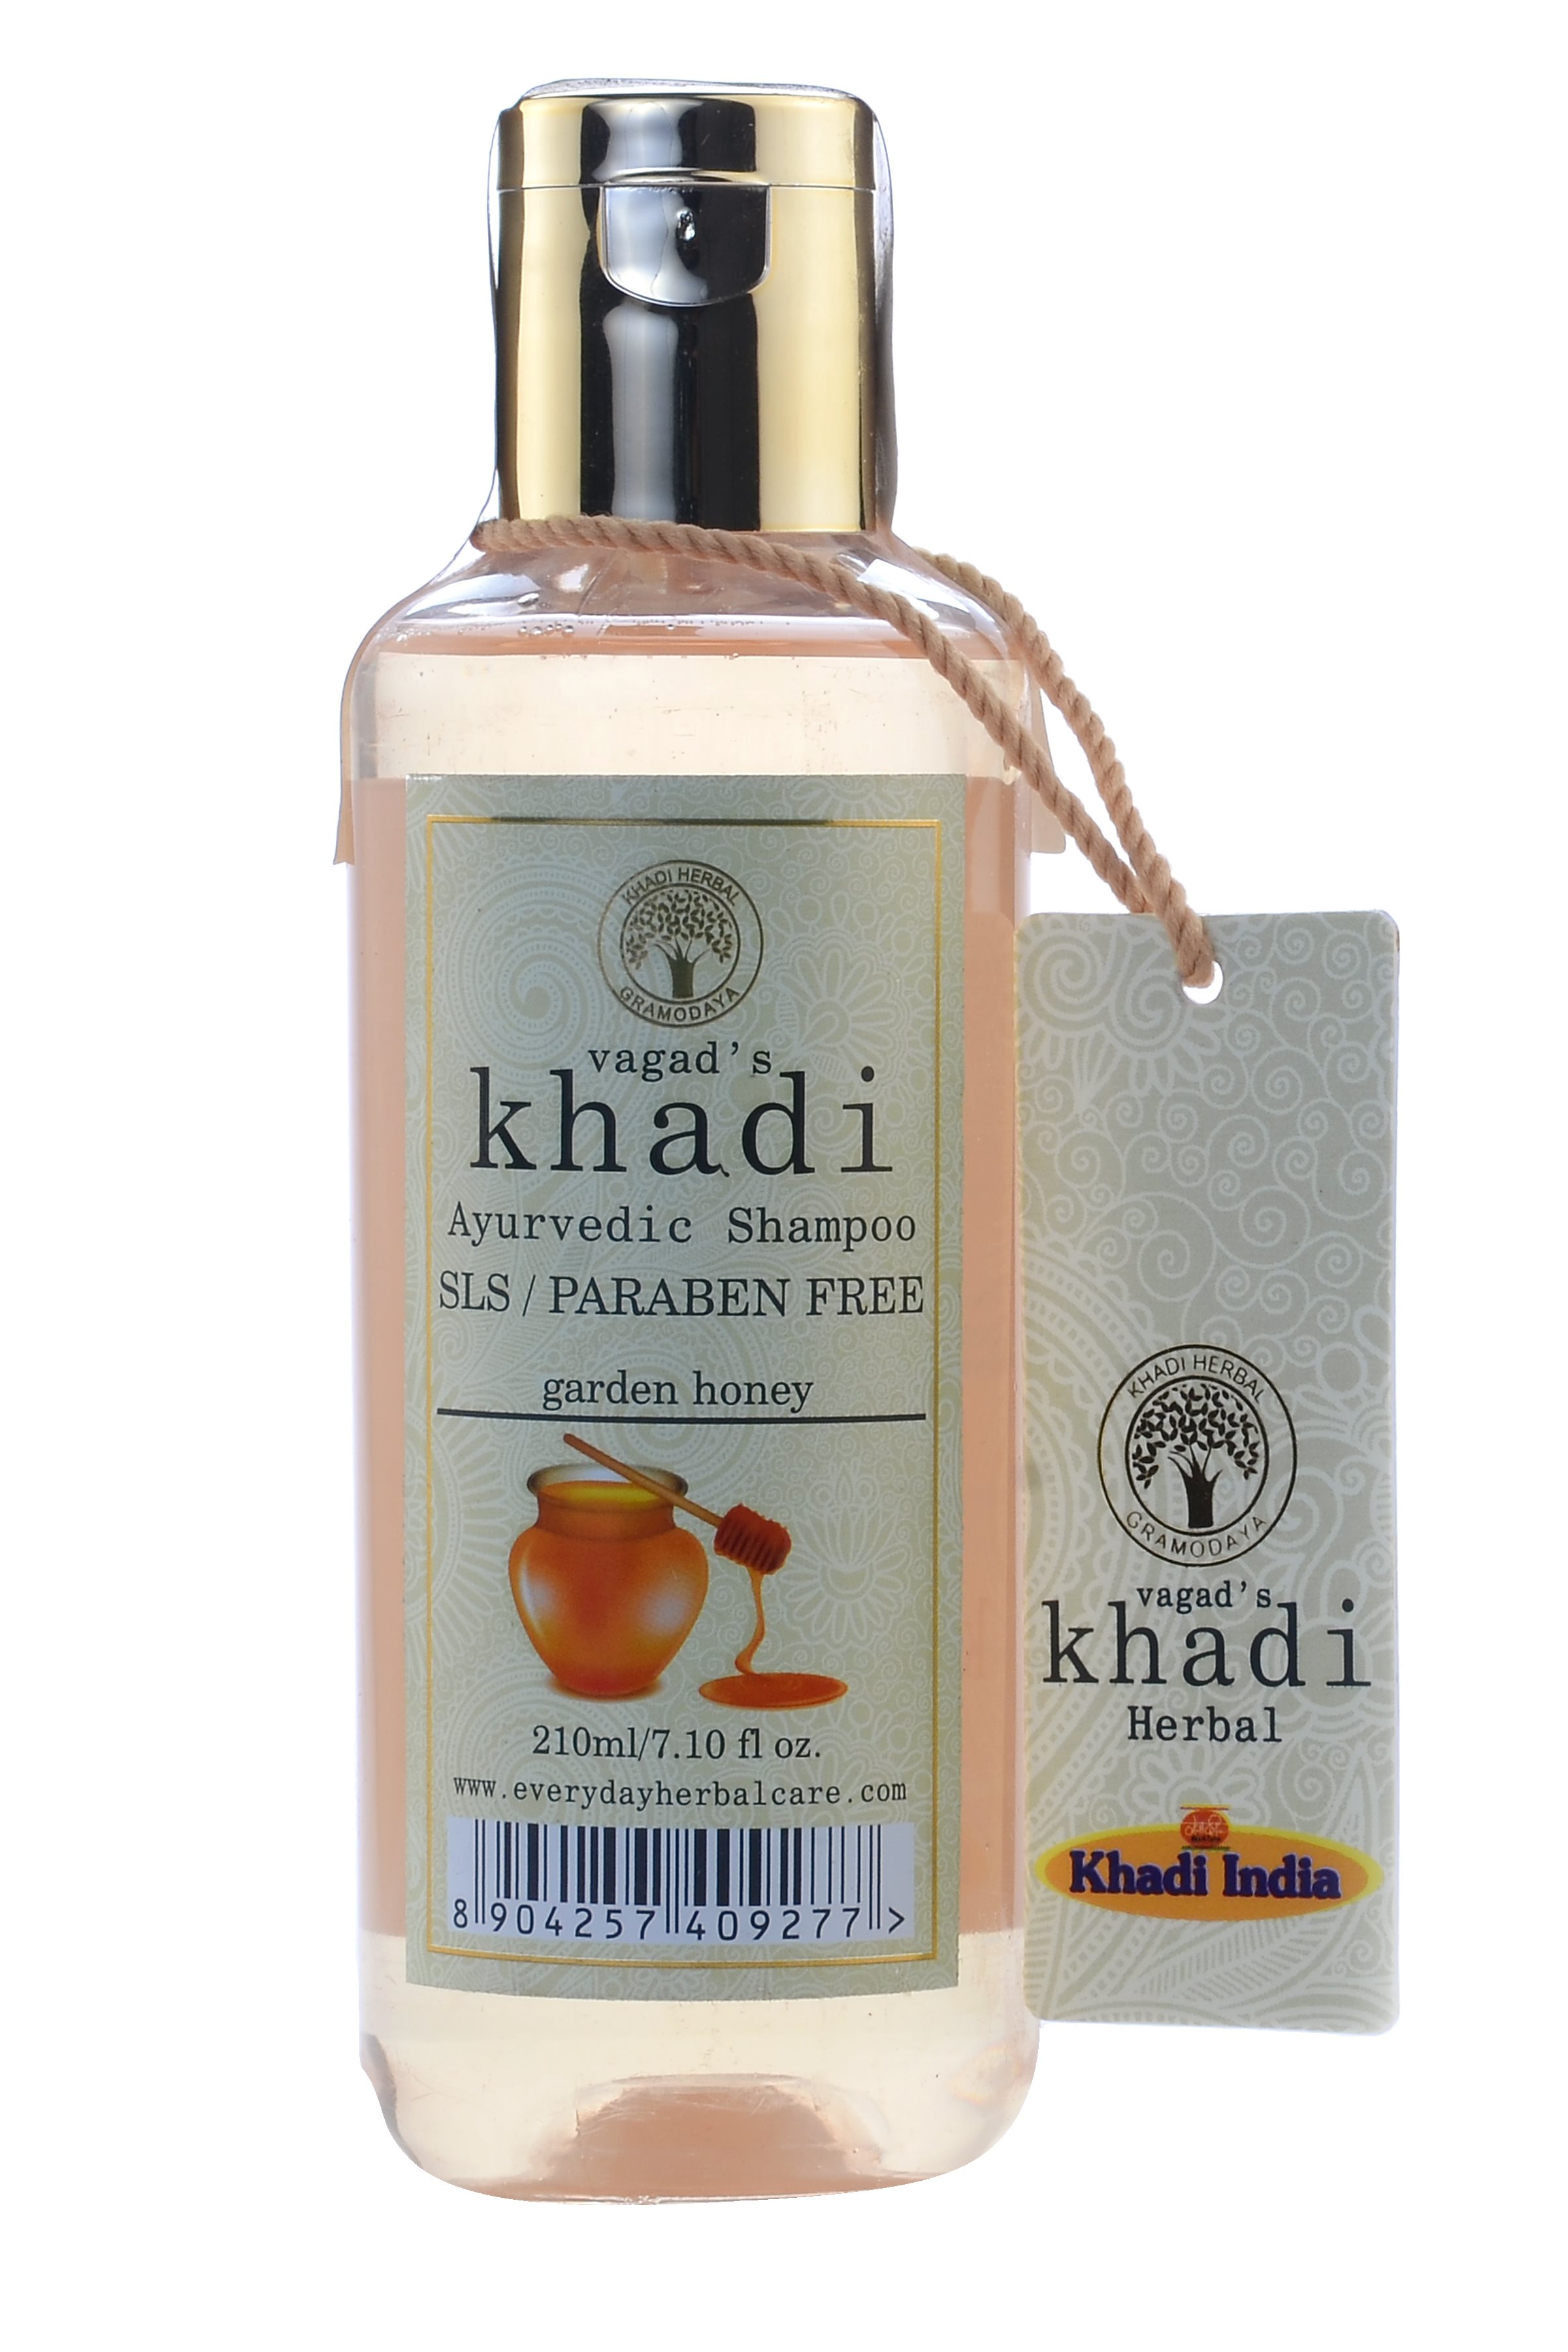 Buy Vagad's Khadi S.L.S And Paraben Free Garden Honey Shampoo at Best Price Online